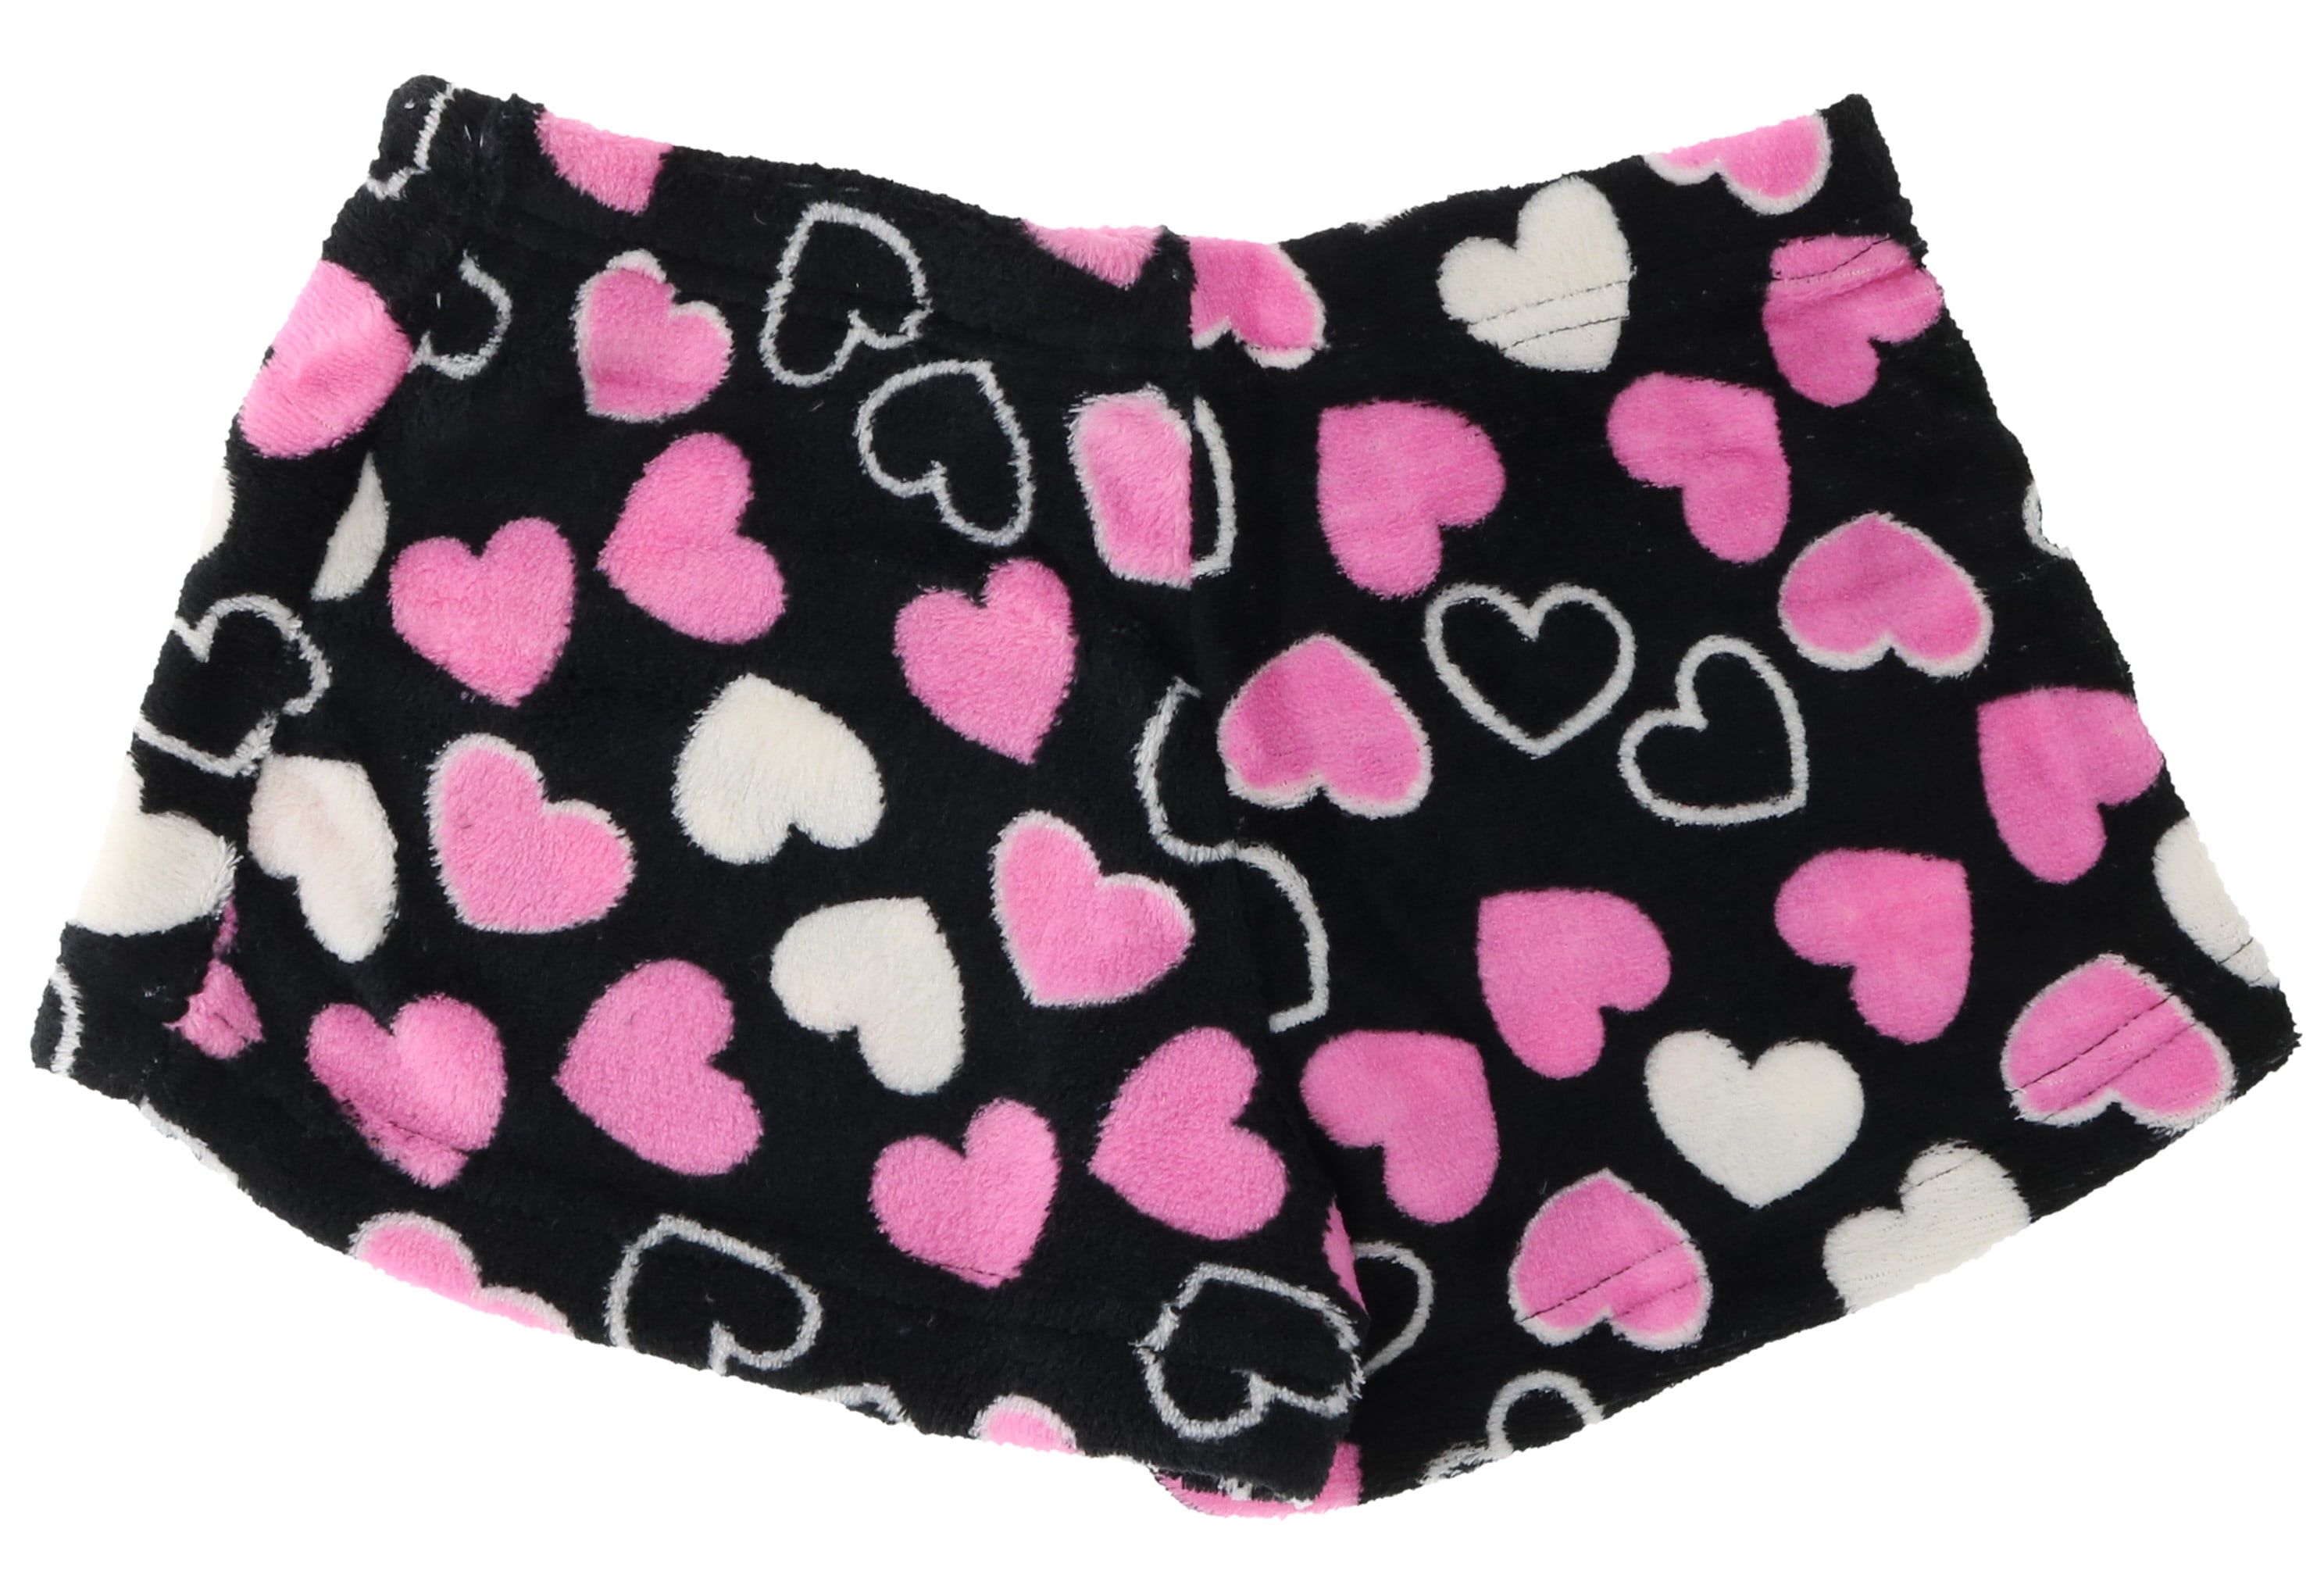 Emme Jordan Junior's Fuzzy Plush Pajama Shorts (Aqua & Rainbow Dots, Small)  at  Women's Clothing store